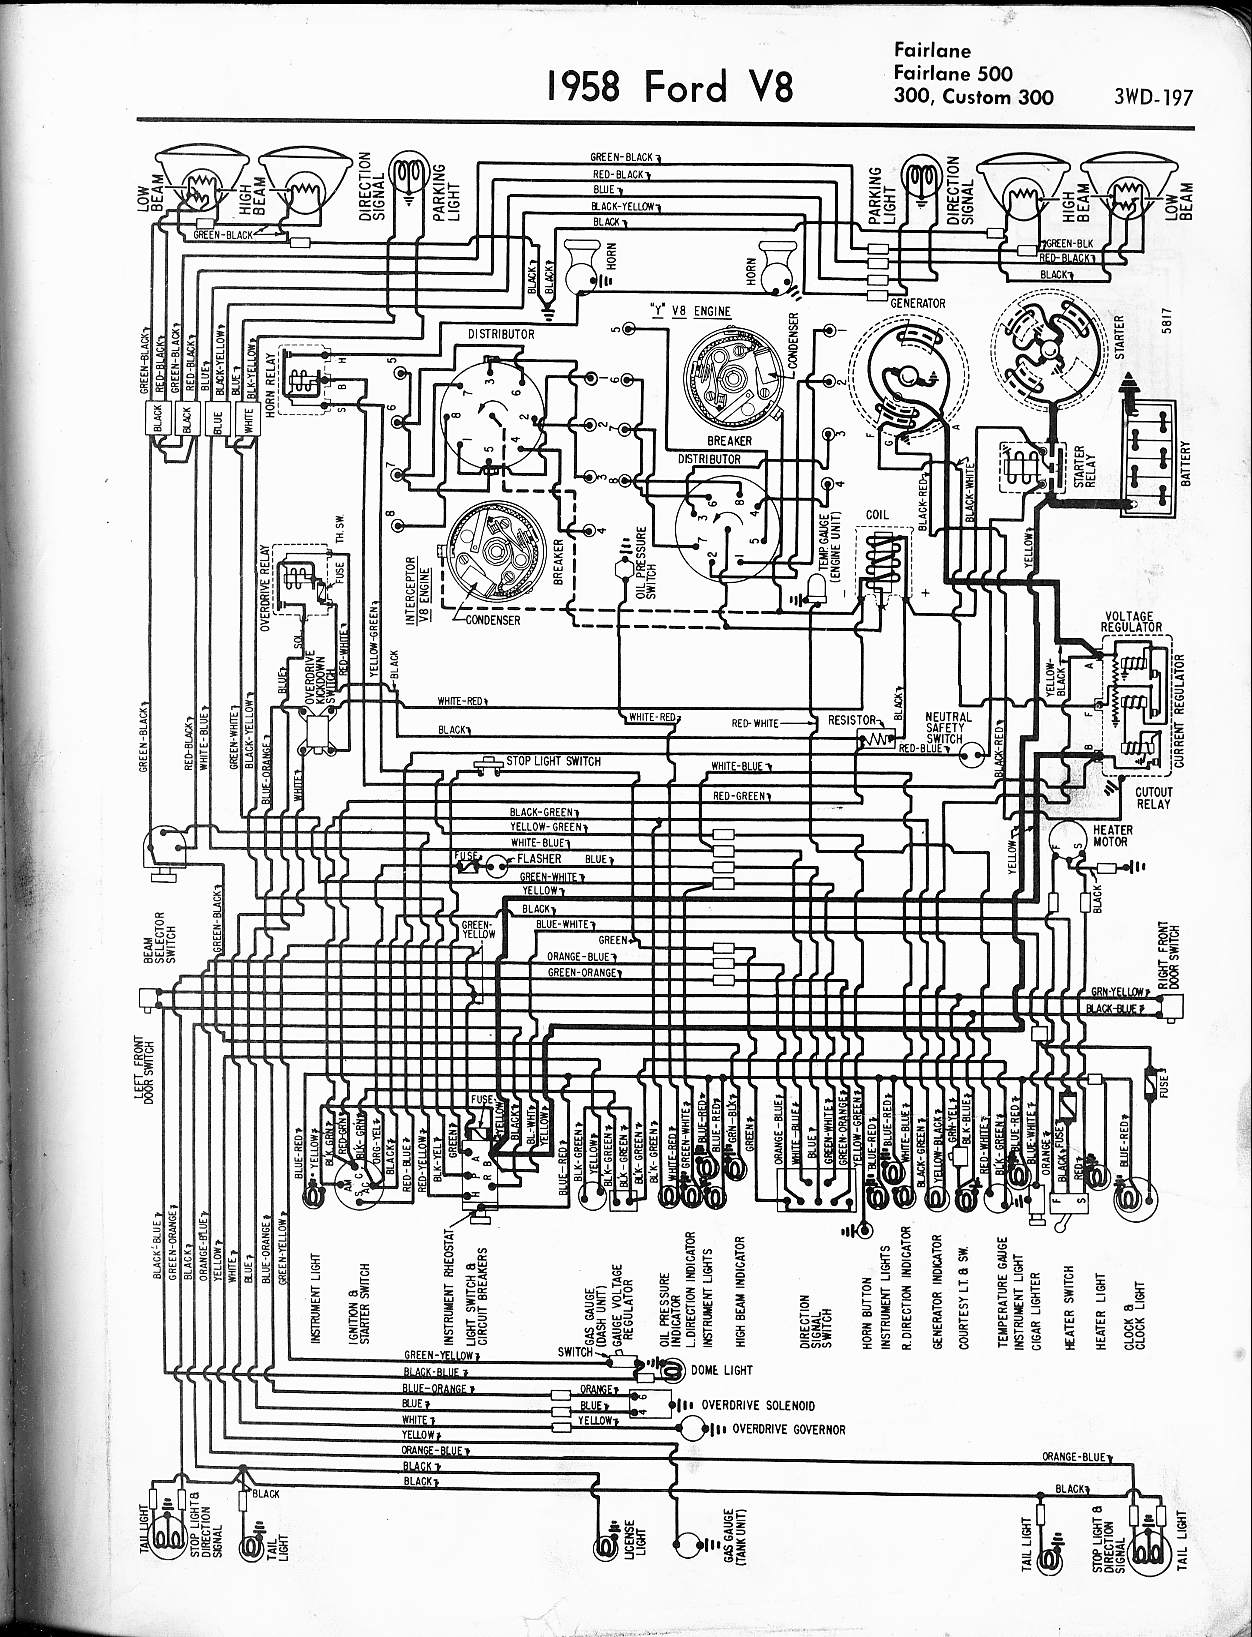 Ford telstar wiring diagram download #7